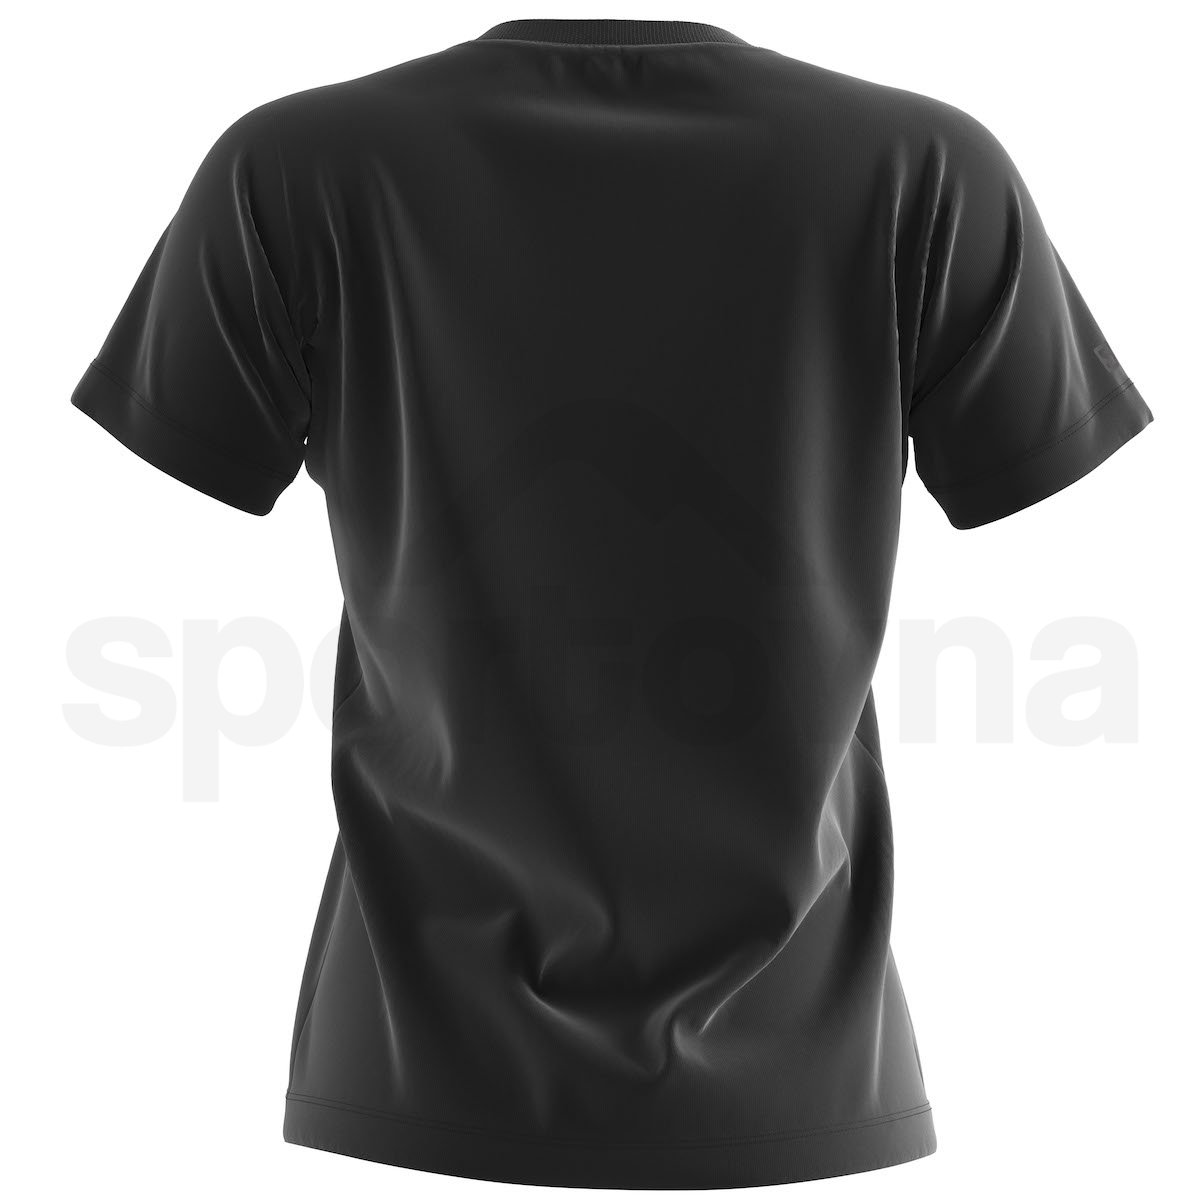 Tričko Salomon Outlife Big Logo Tee W - černá